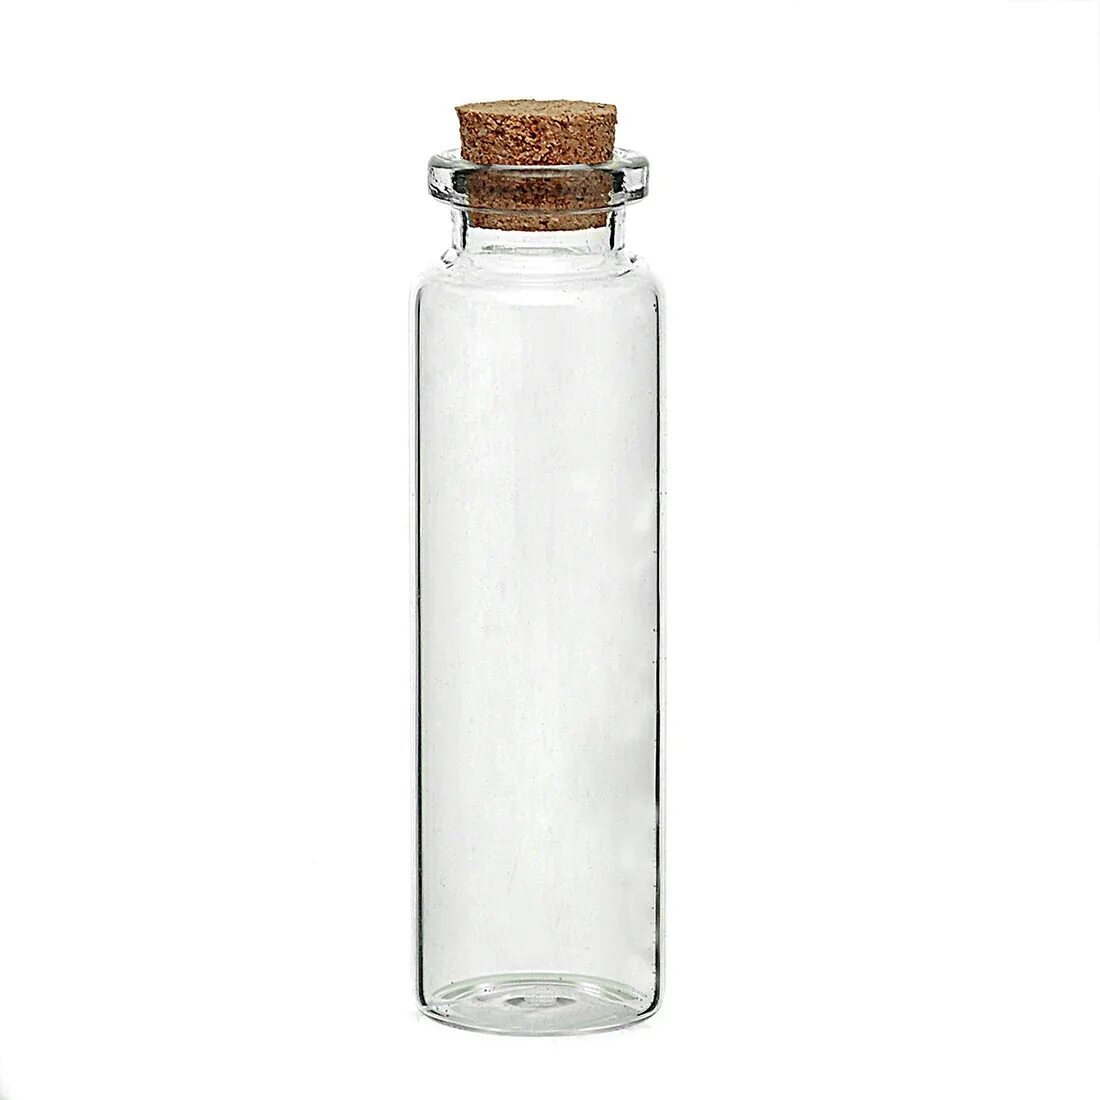 Маленький пузырик. Стеклянная бутылка. Стеклянная бутылка с пробкой. Маленькие стеклянные бутылочки. Бутылка прозрачная стеклянная.